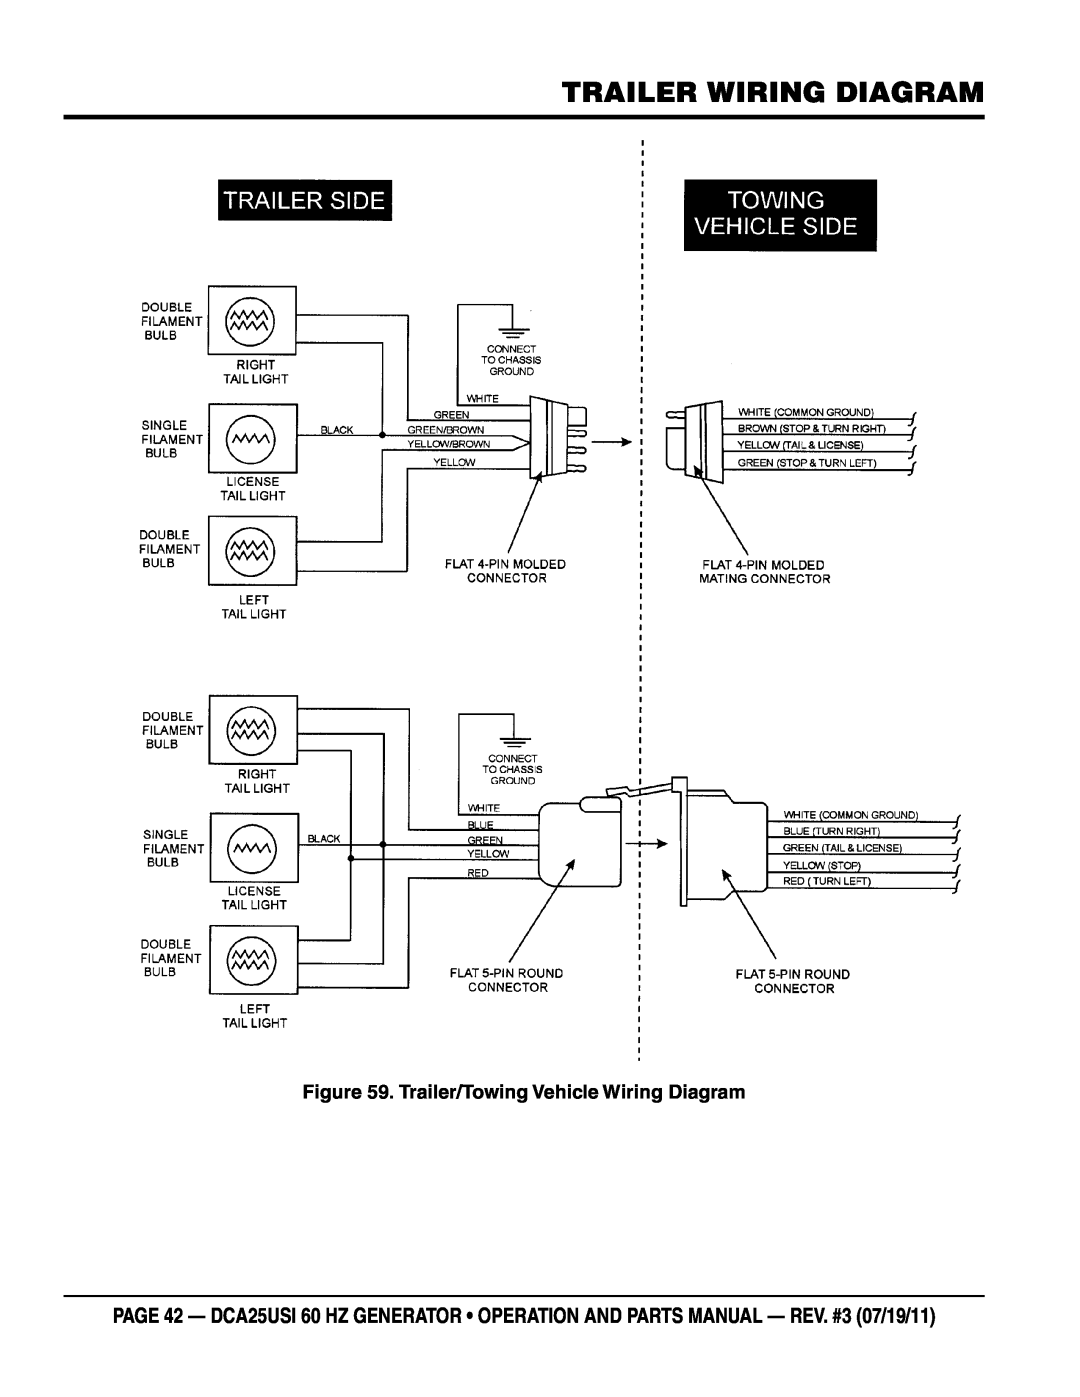 Multiquip DCA25USI manual Trailer Wiring Diagram, Trailer/Towing Vehicle Wiring Diagram 